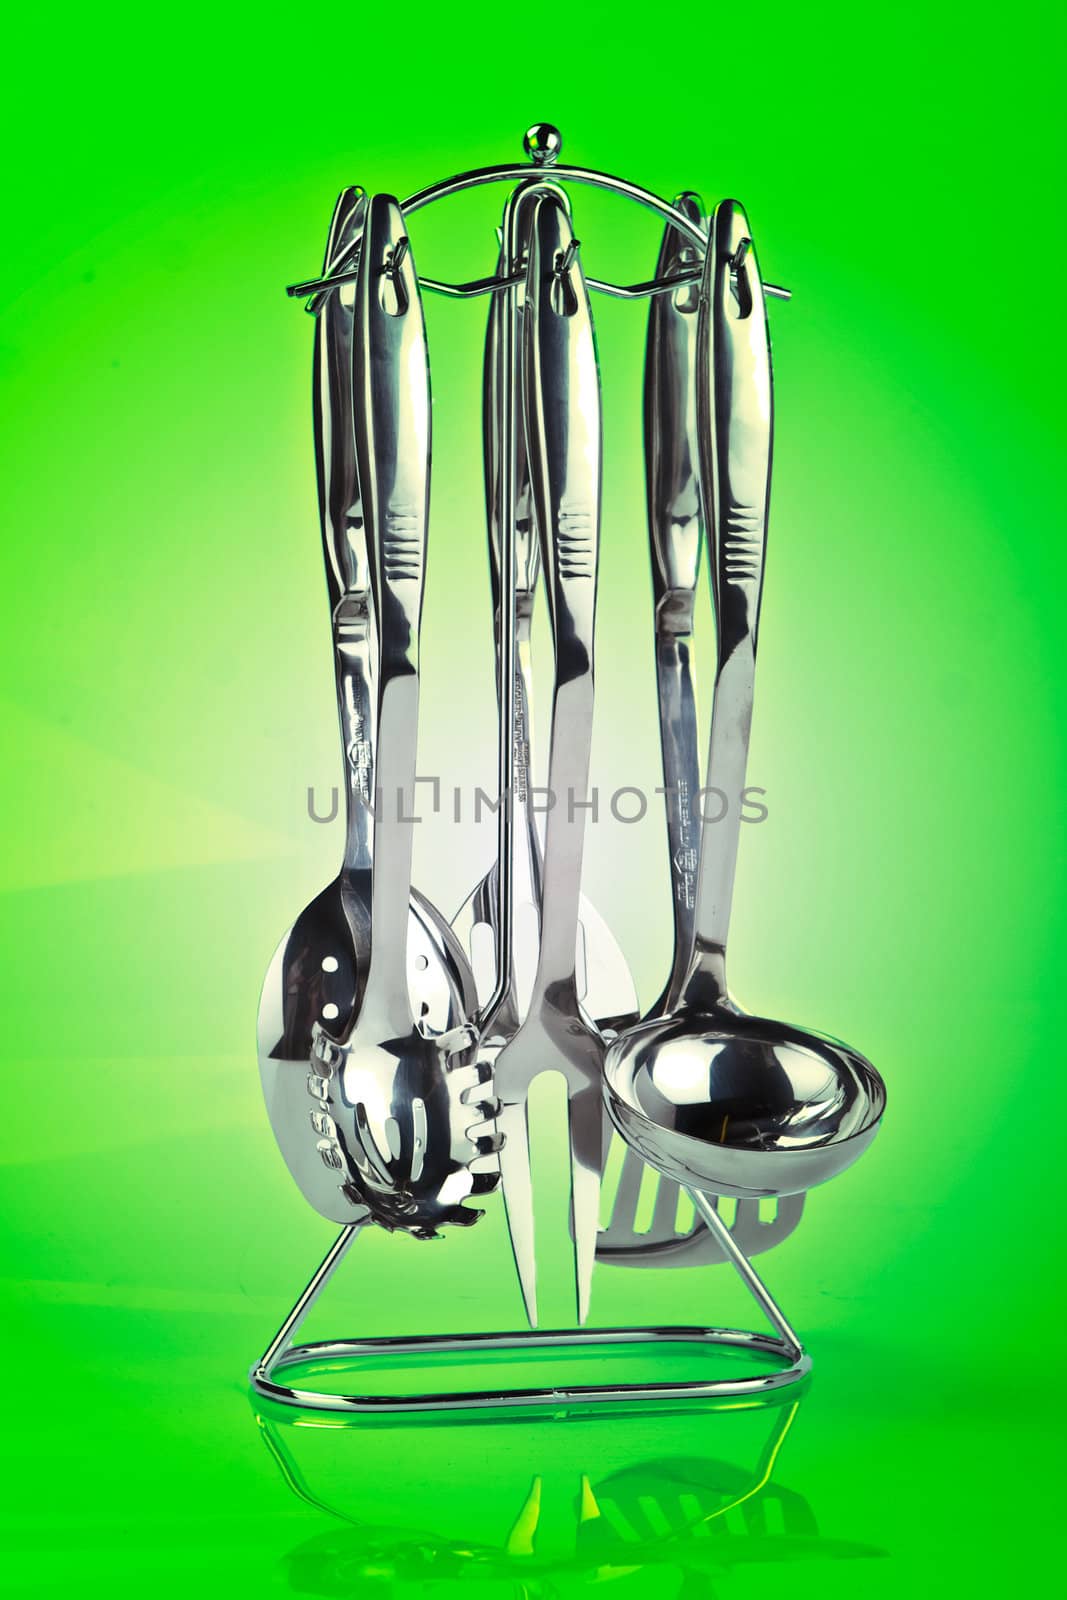 Kitchen utensil set standing against green background 